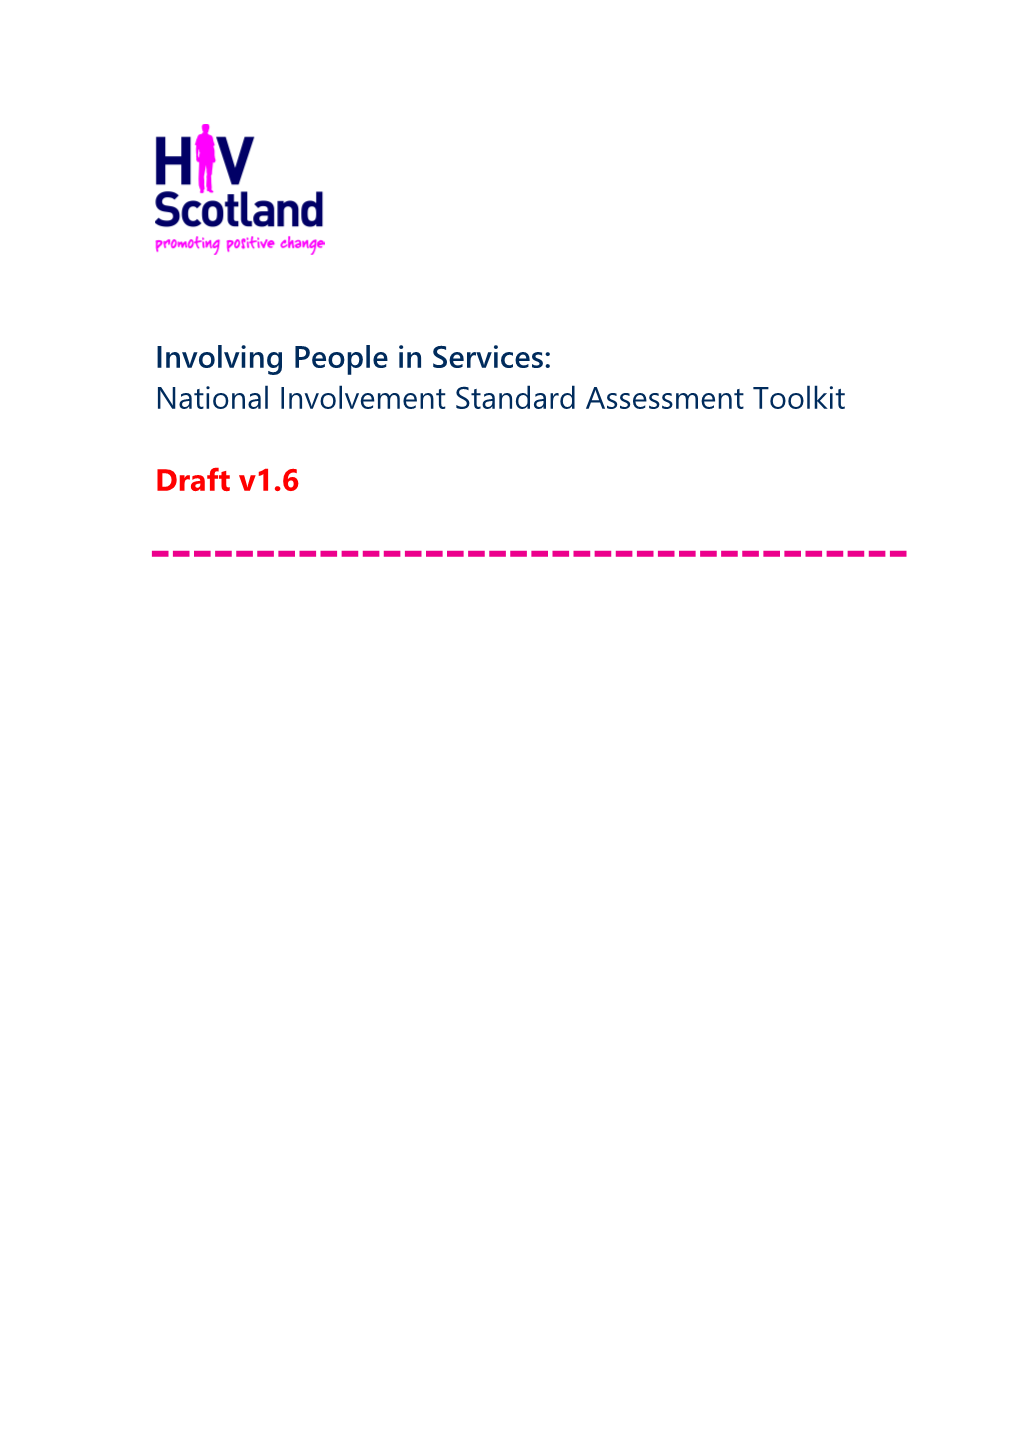 National Involvement Standard Assessment Toolkit